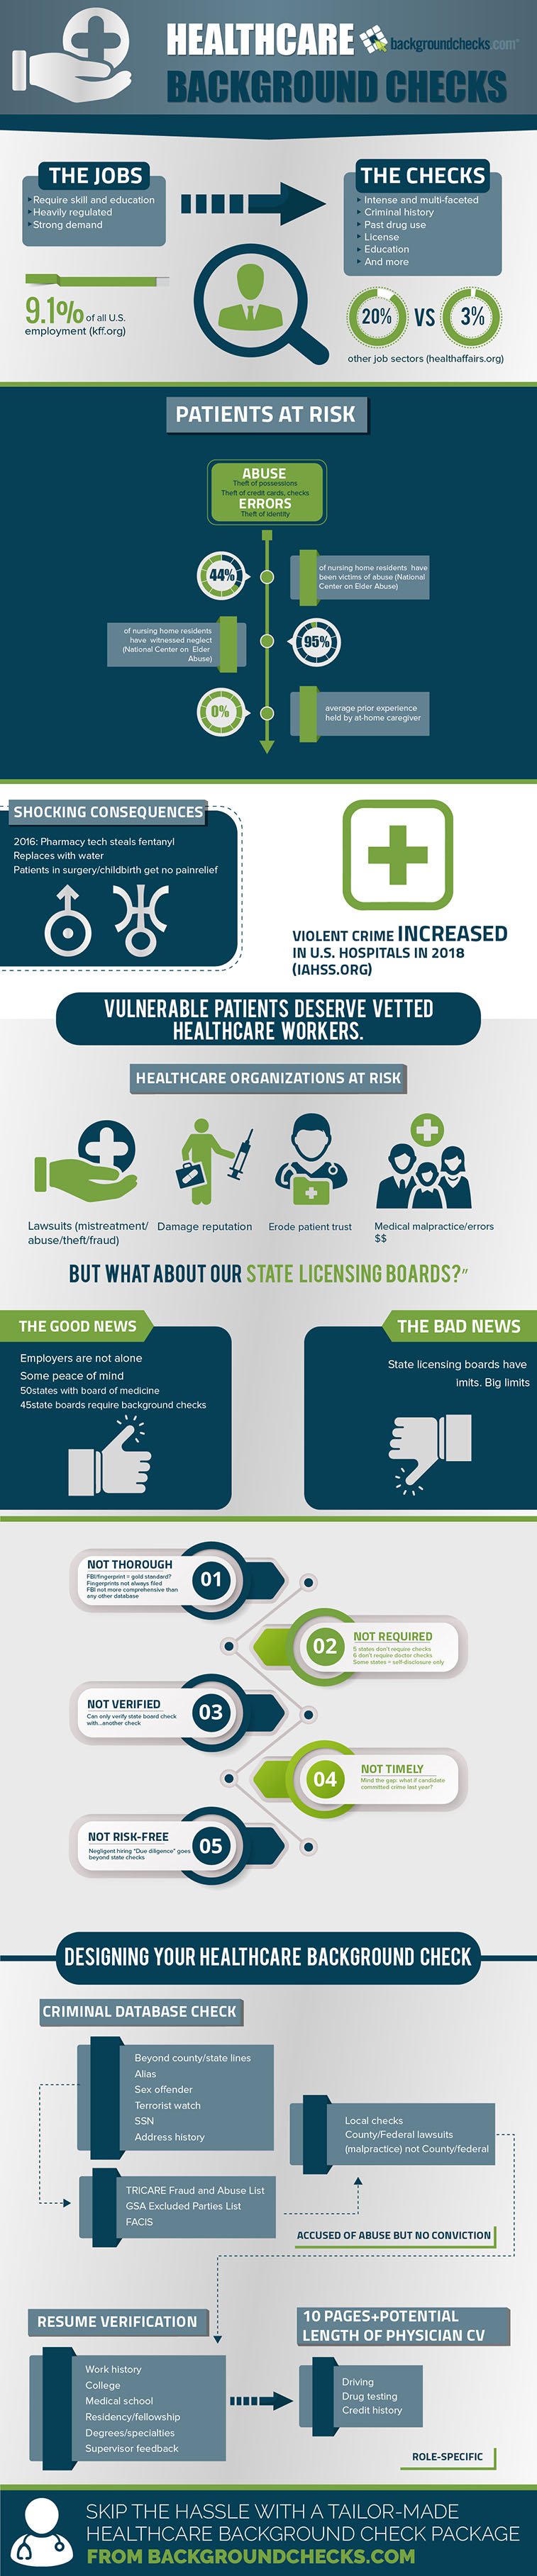 Infographic - Healthcare Bacground Checks